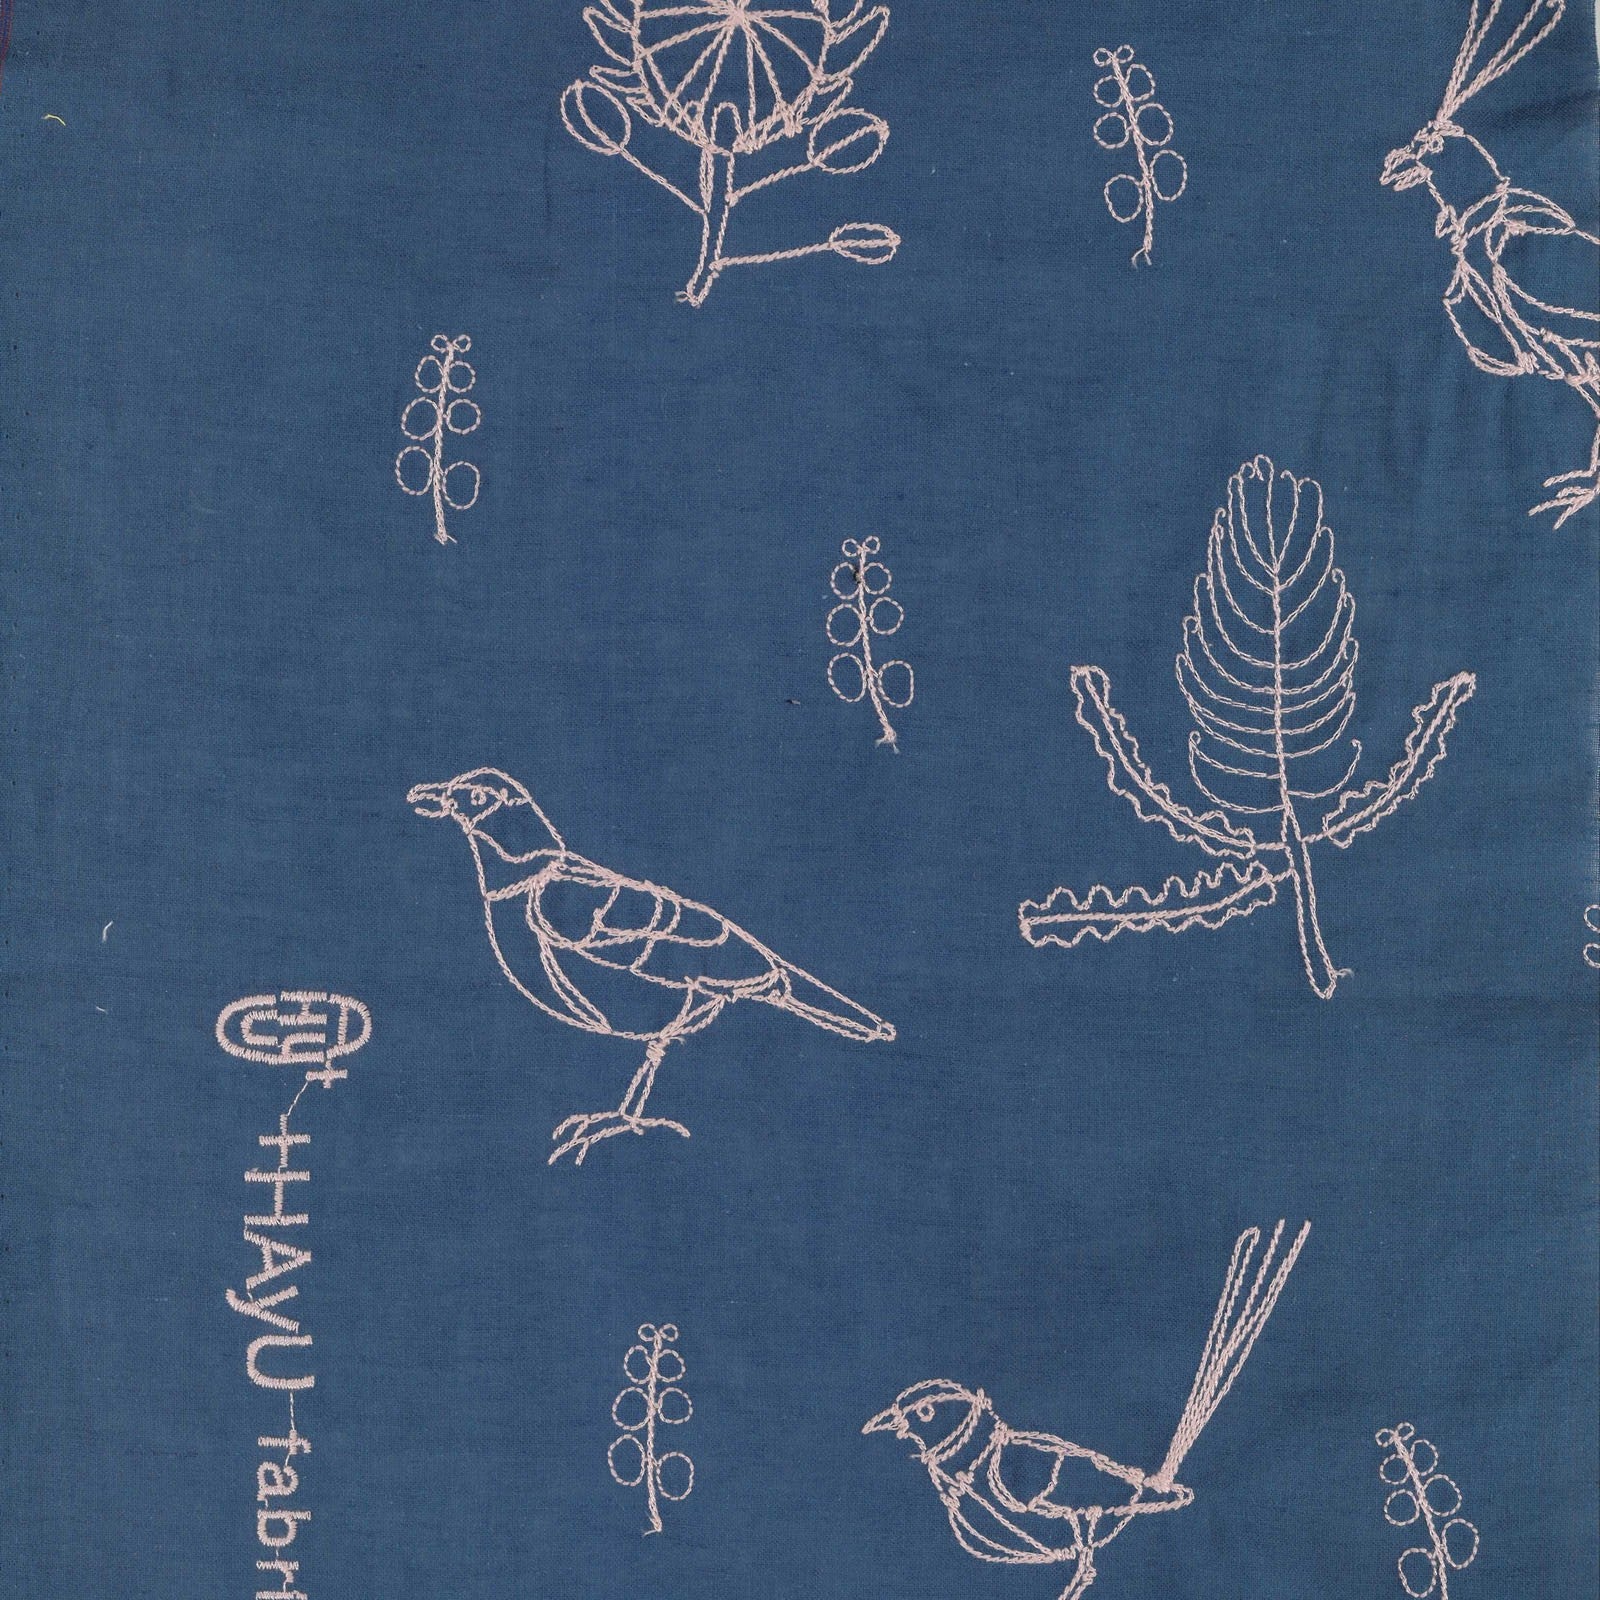 Hayu Embroidered Bird Cotton/Linen Double Gauze Fabric - EGX-7709 1 C22